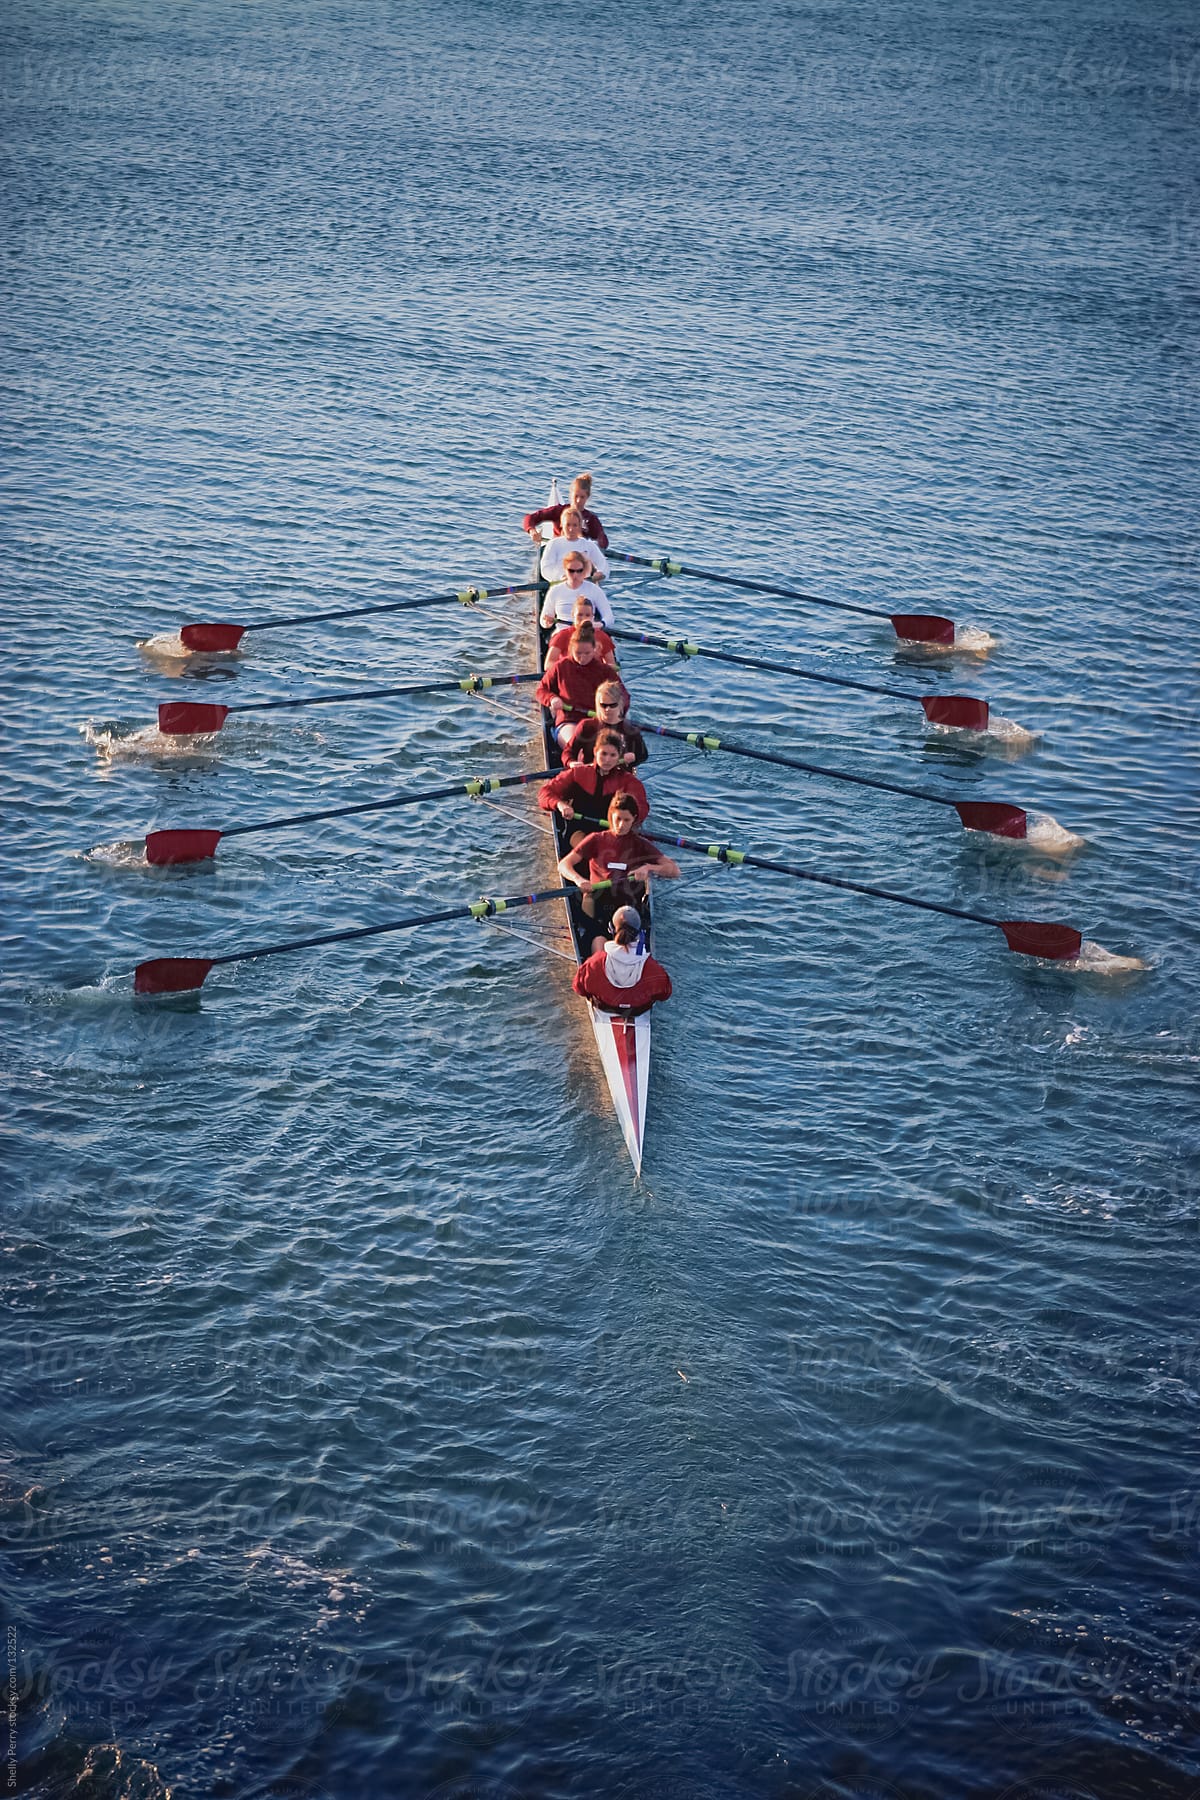 Women's crew team rowing in unison